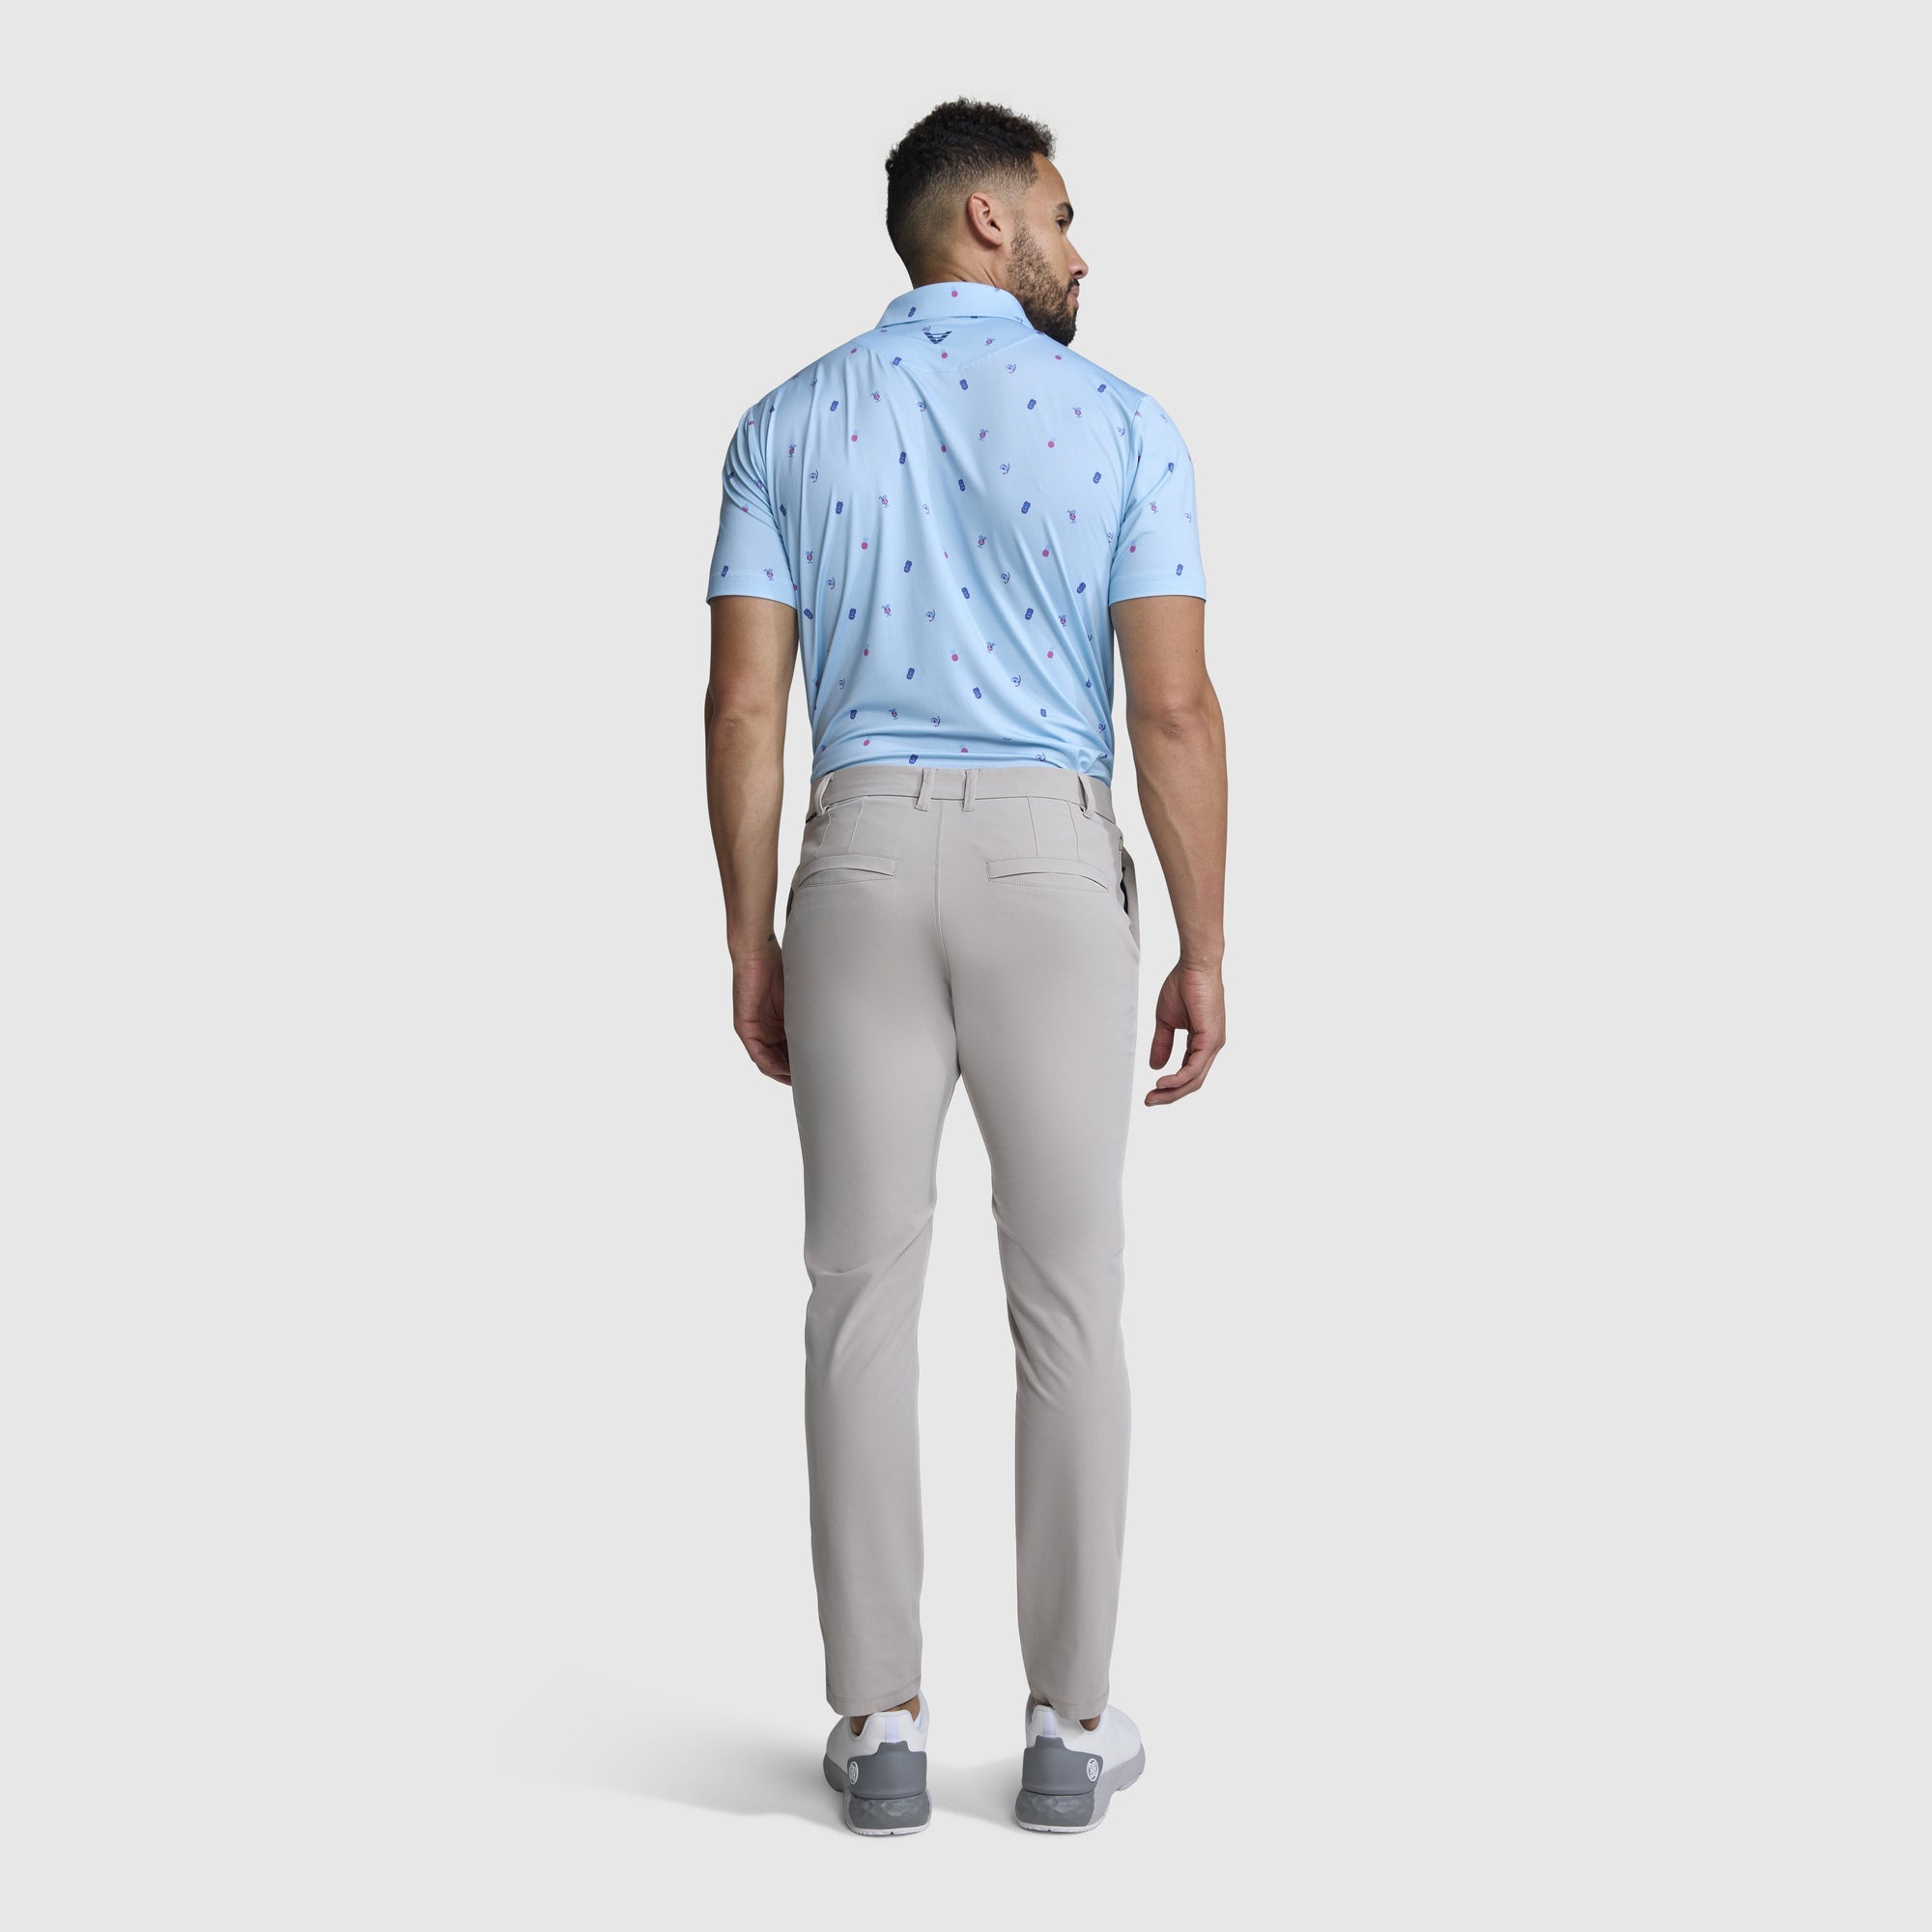 Men's Versatile Stretch Pant